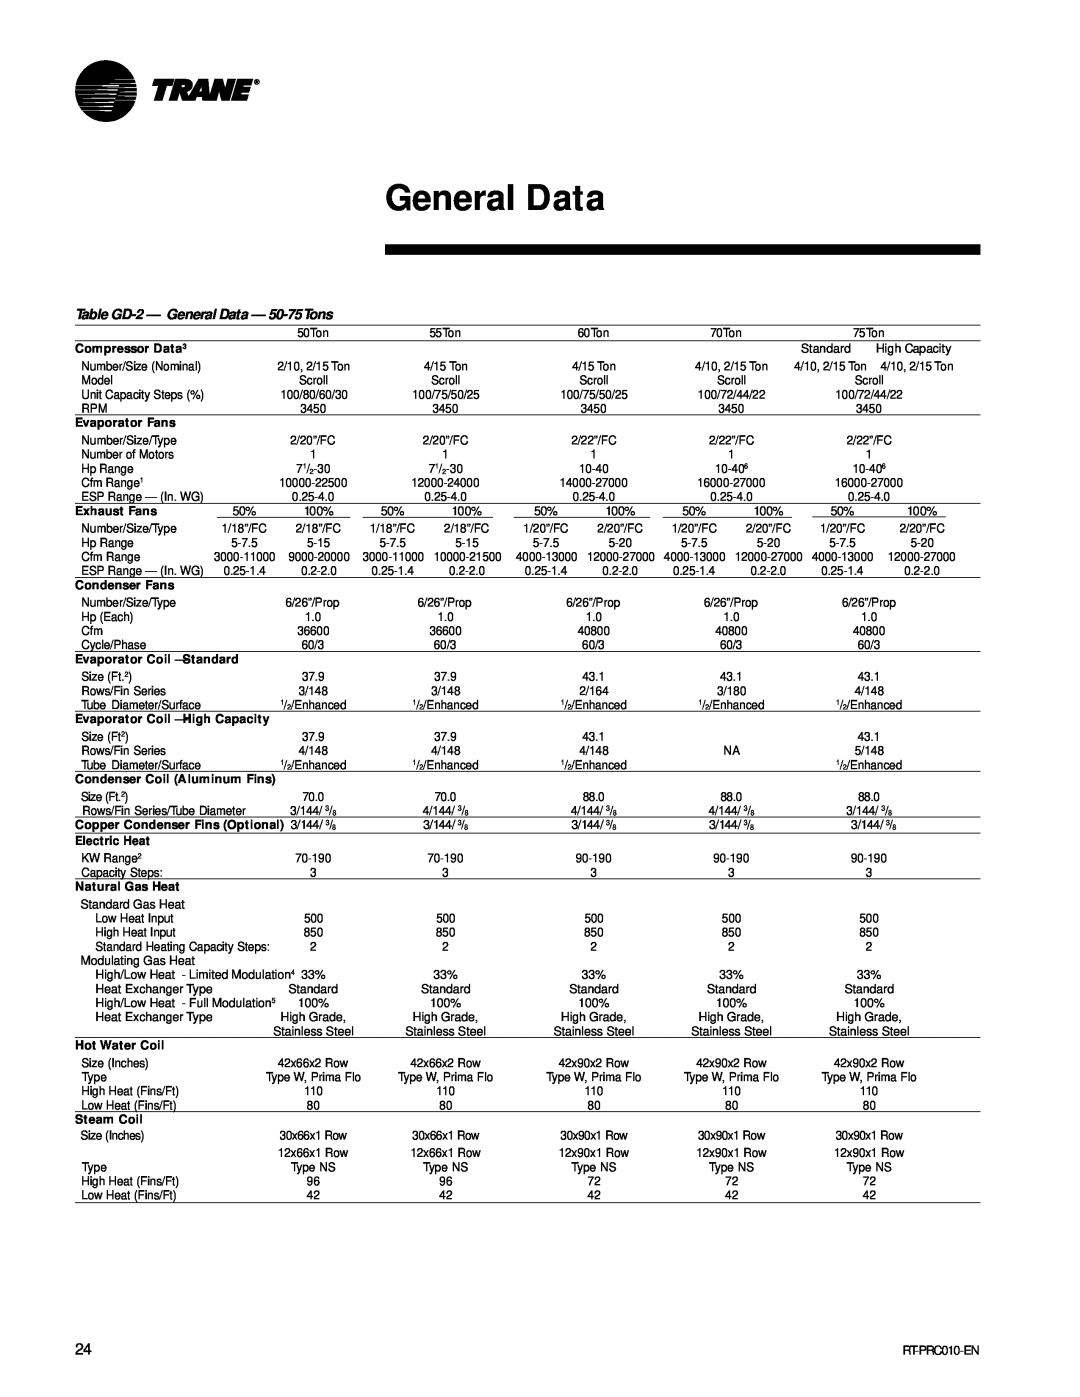 Trane RT-PRC010-EN manual Table GD-2— General Data — 50-75Tons 